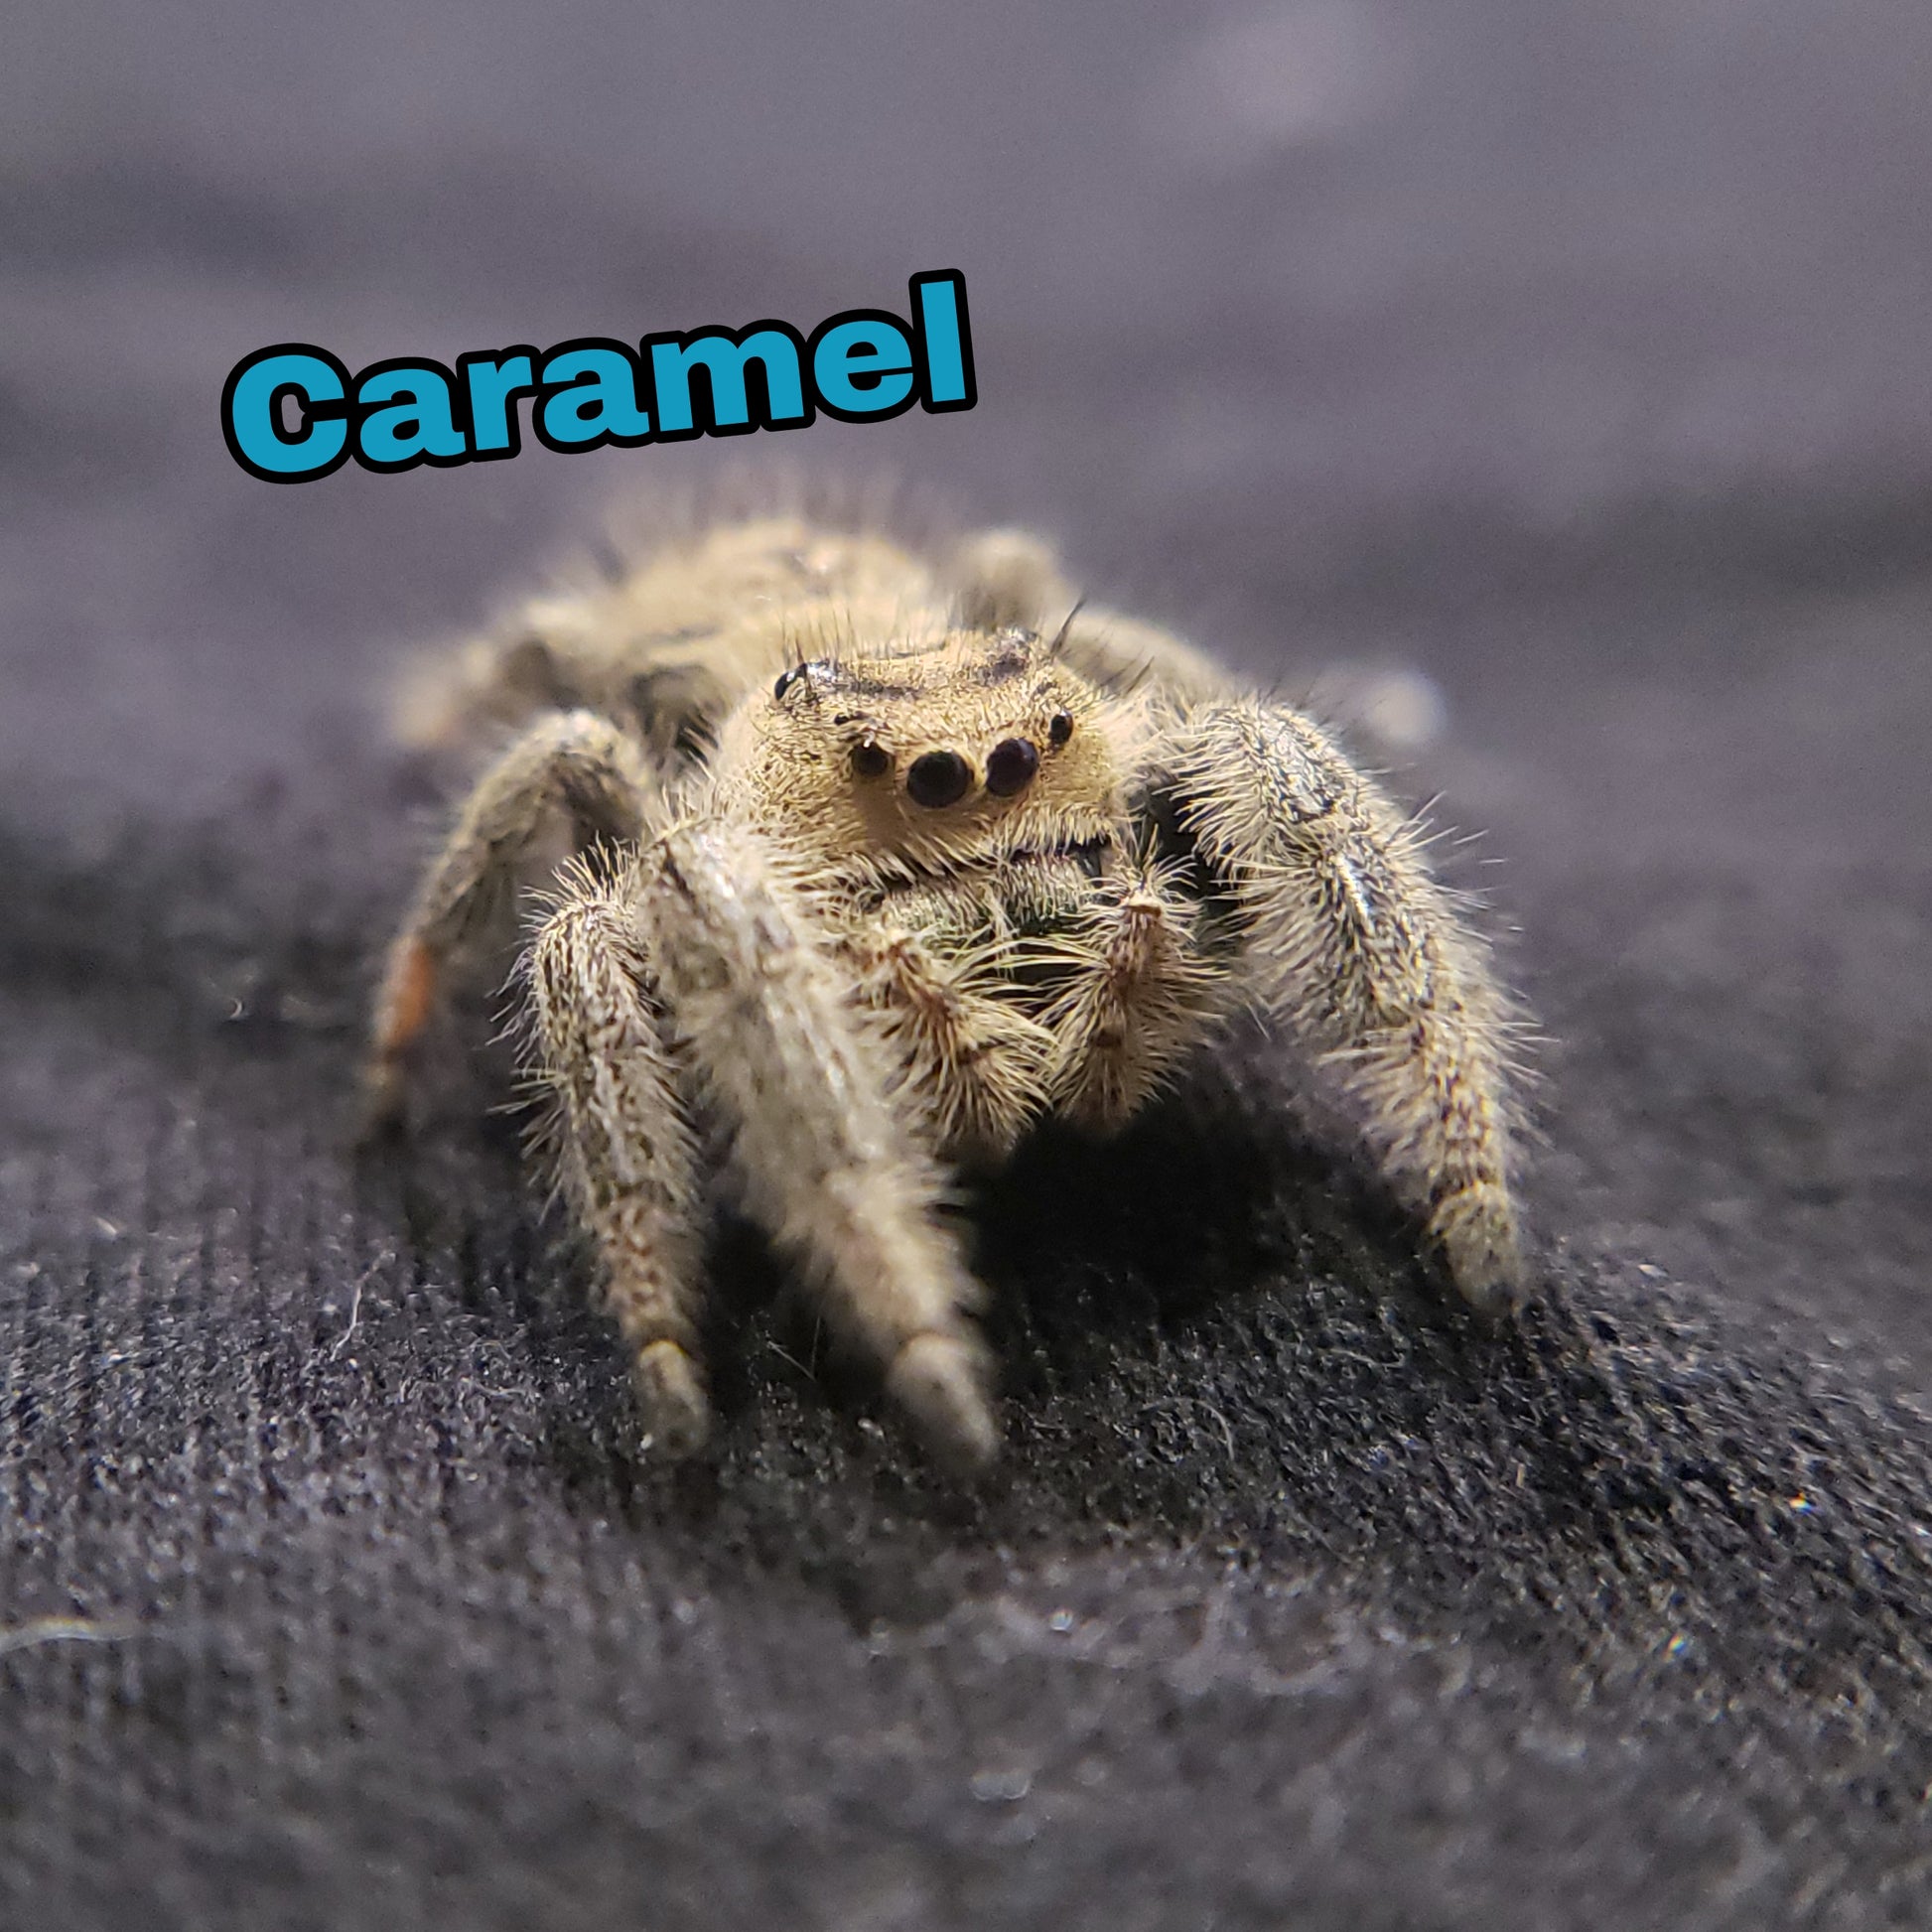 Regal Jumping Spider "Caramel" - Jumping Spiders For Sale - Spiders Source - #1 Regal Jumping Spider Store